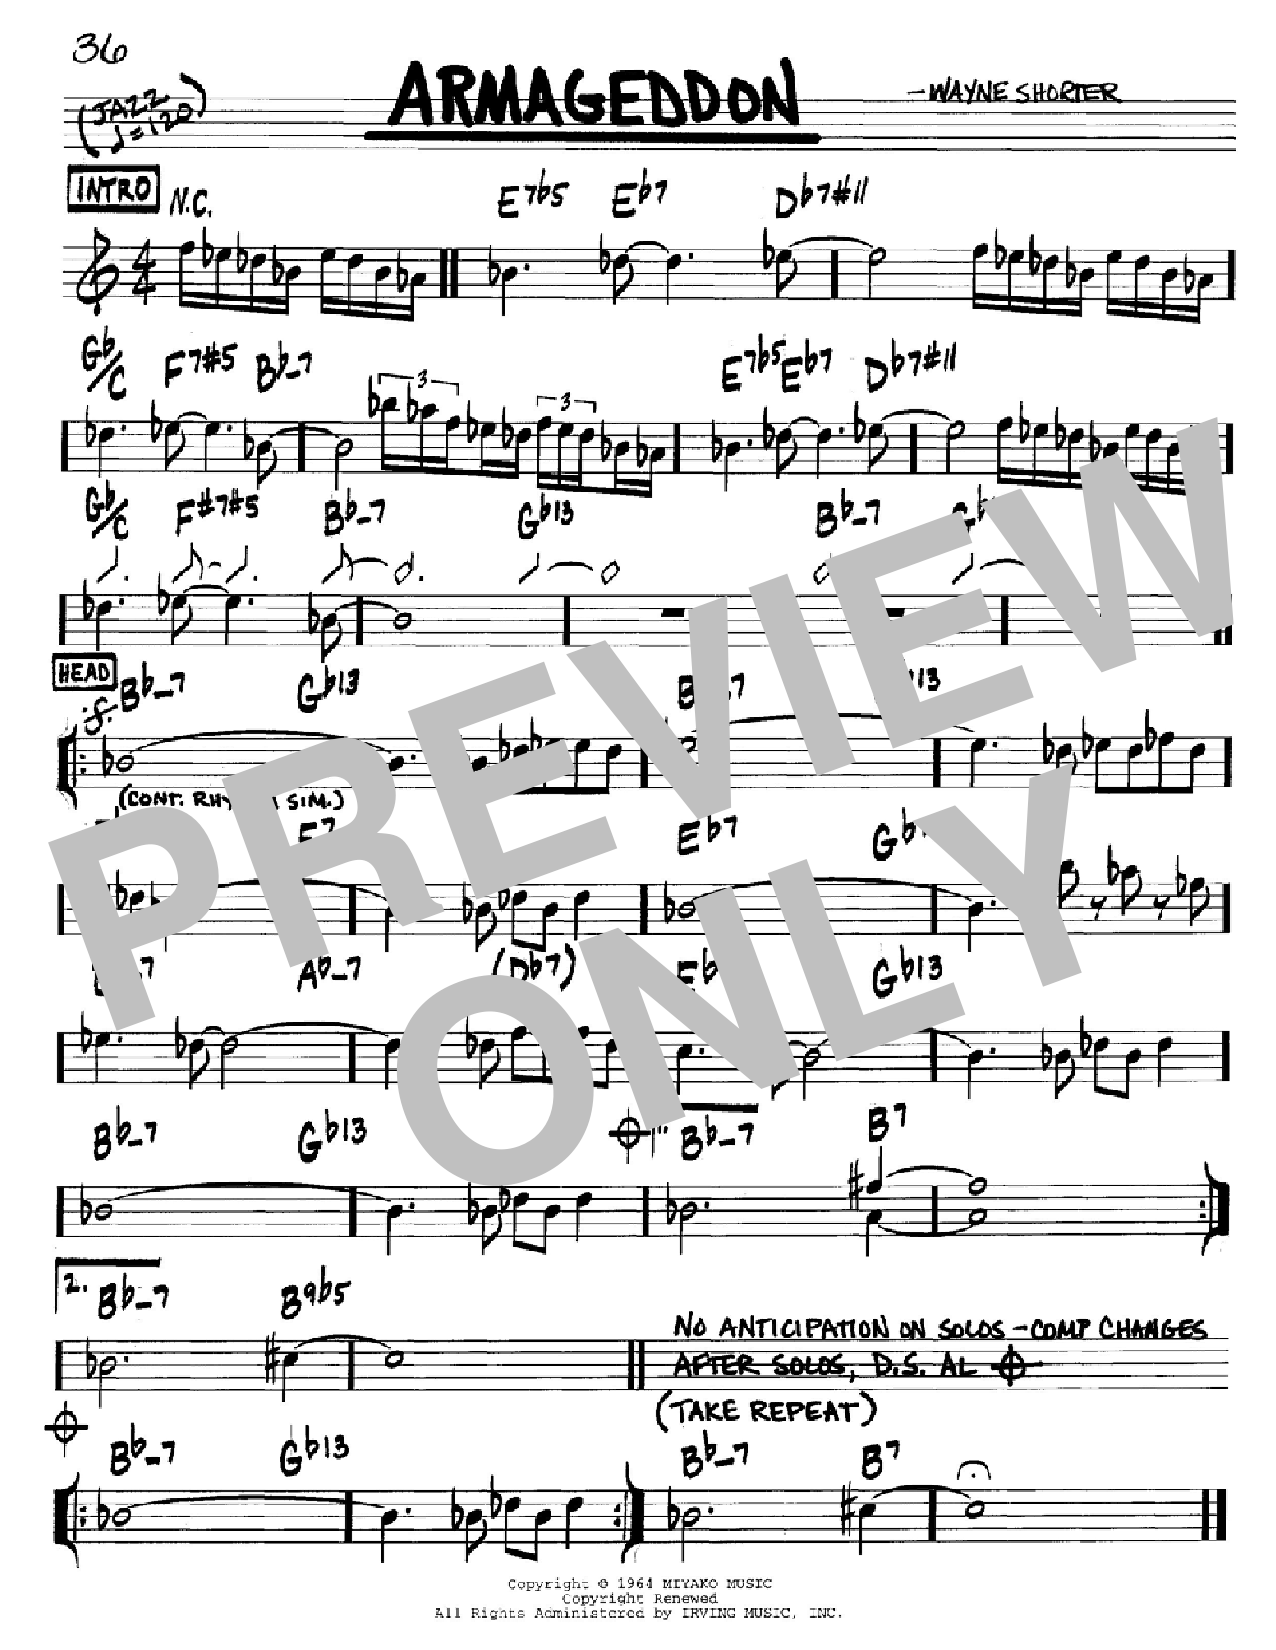 Wayne Shorter Armageddon Sheet Music Notes & Chords for Real Book - Melody & Chords - Bb Instruments - Download or Print PDF